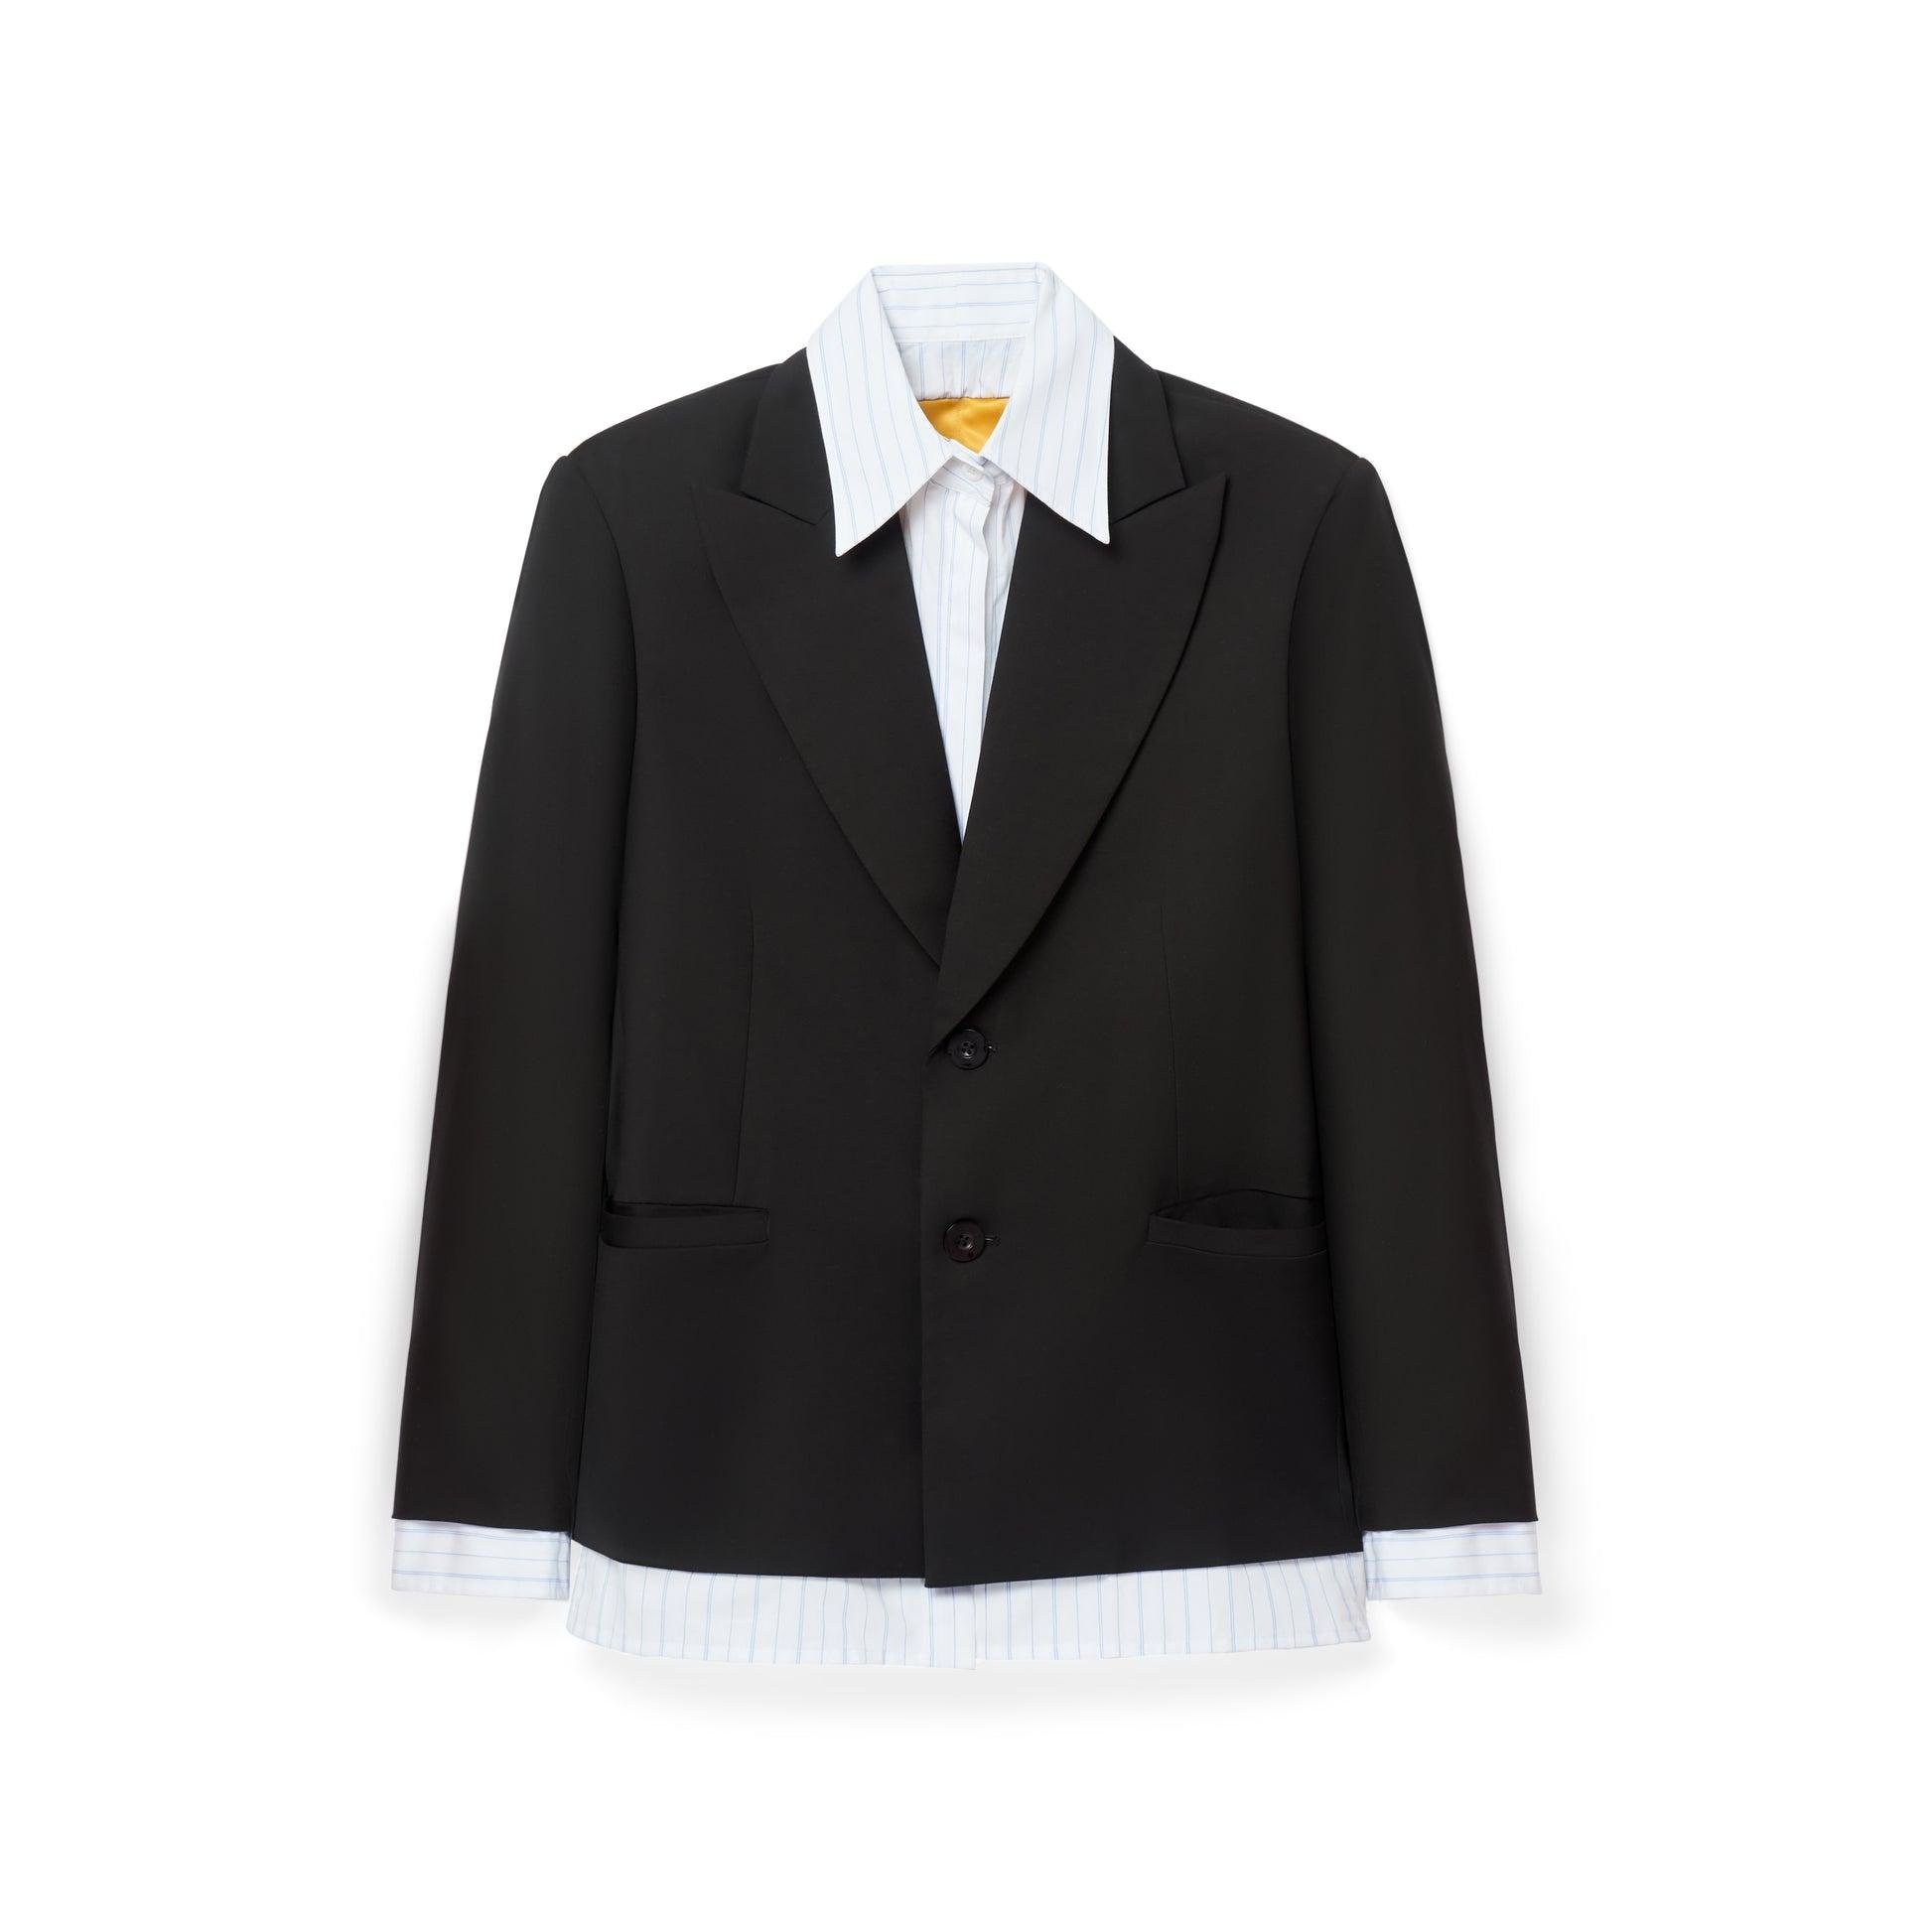 All in 1 suit Top [Black] by KIDSUPER STUDIOS